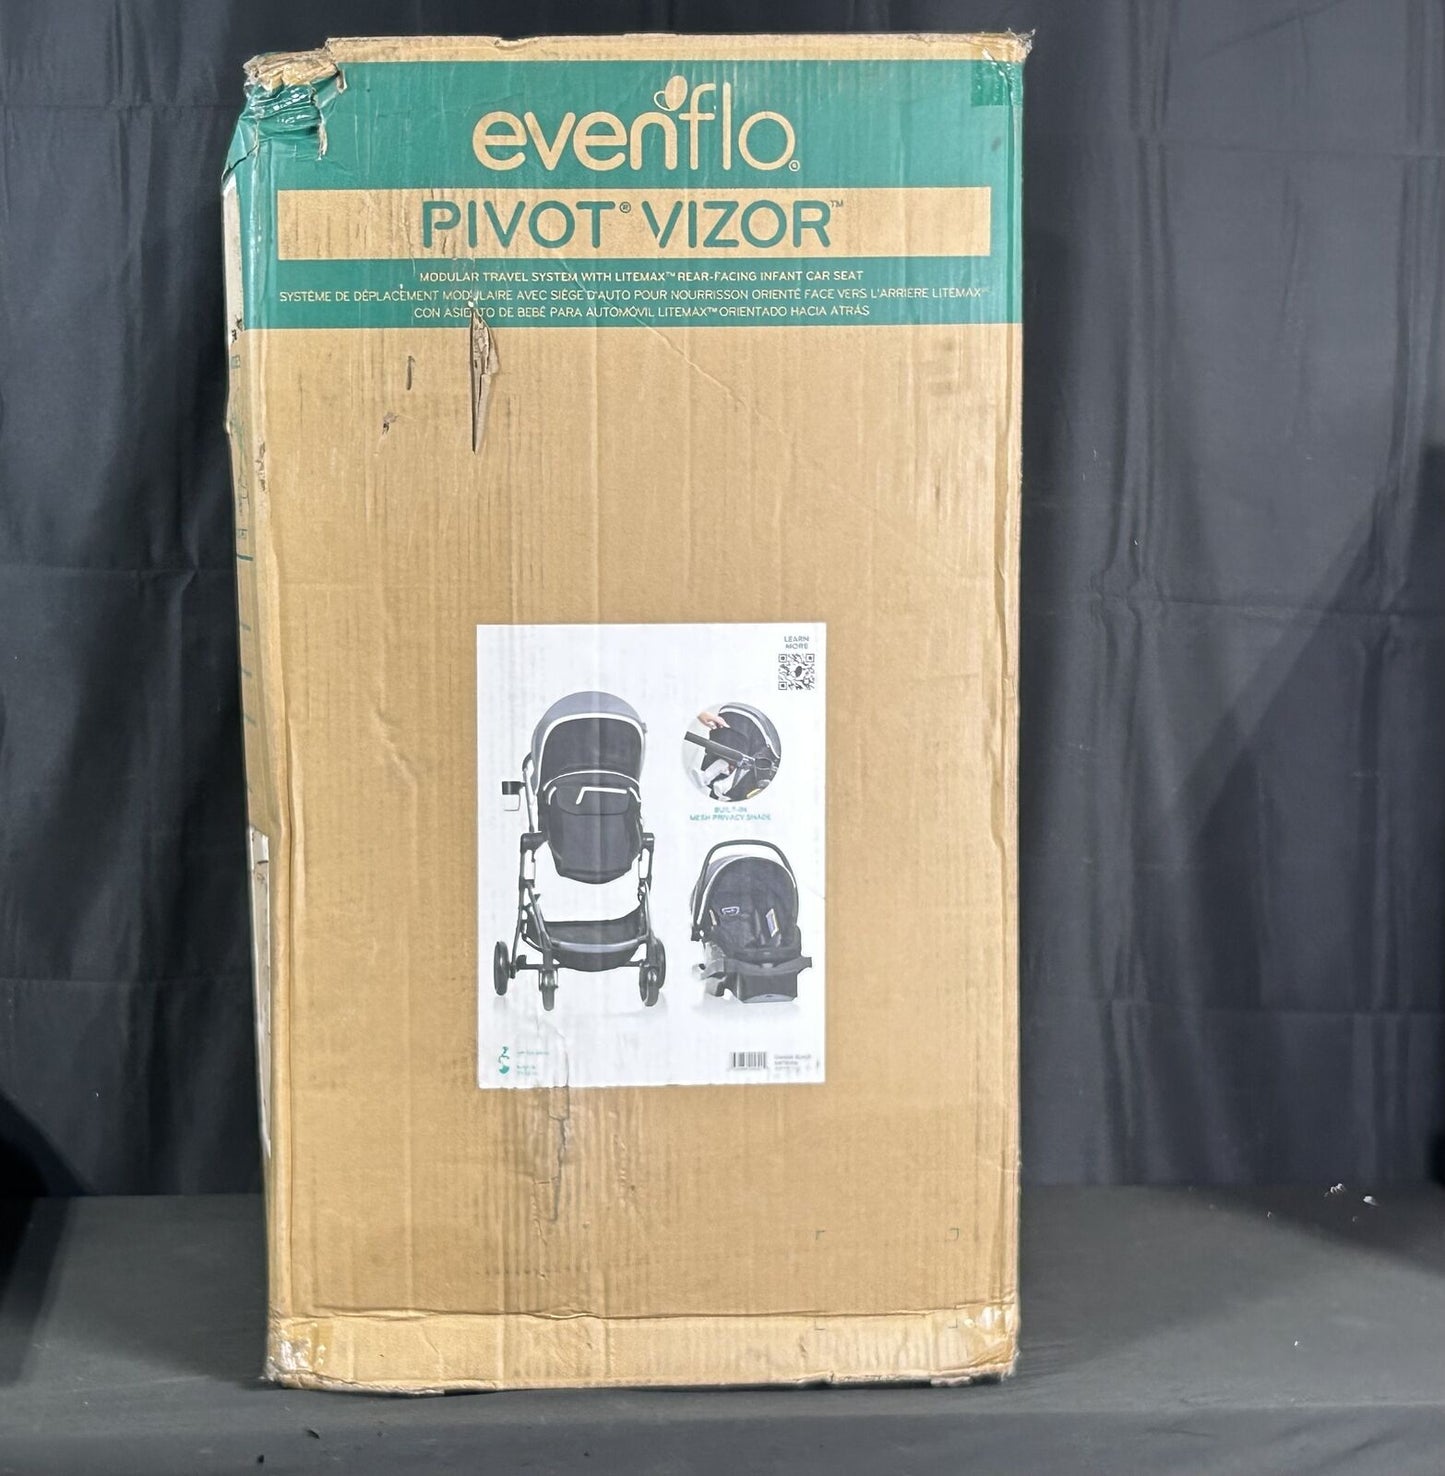 New Evenflo Pivot Vizor Travel System with Car Seat (Black Chasse)